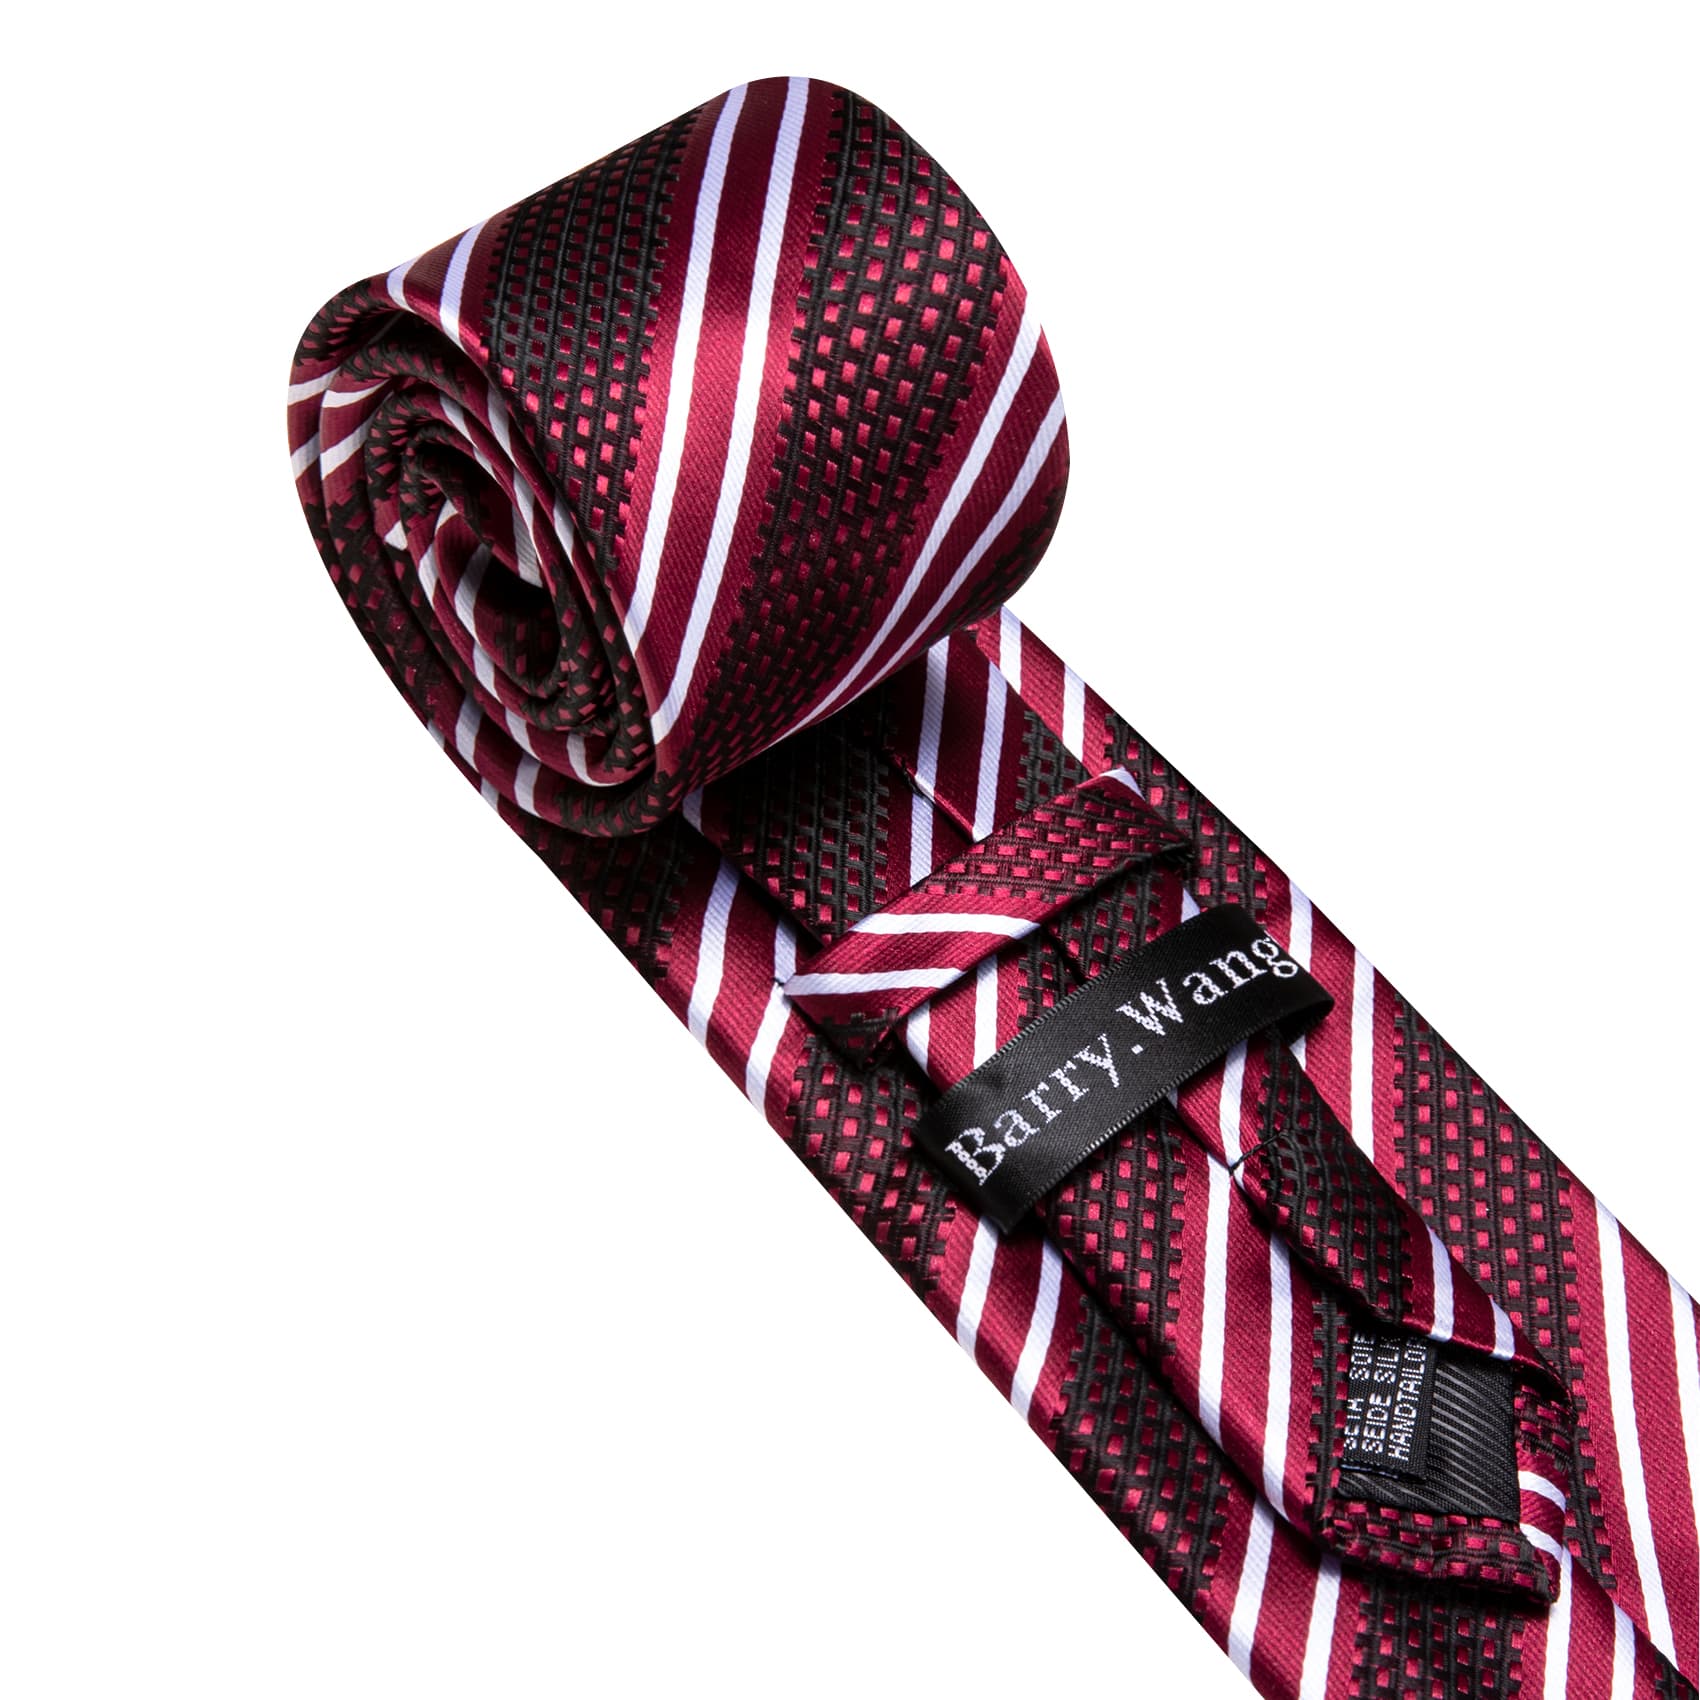  Mens Striped Tie Red Necktie Set with White Stripes